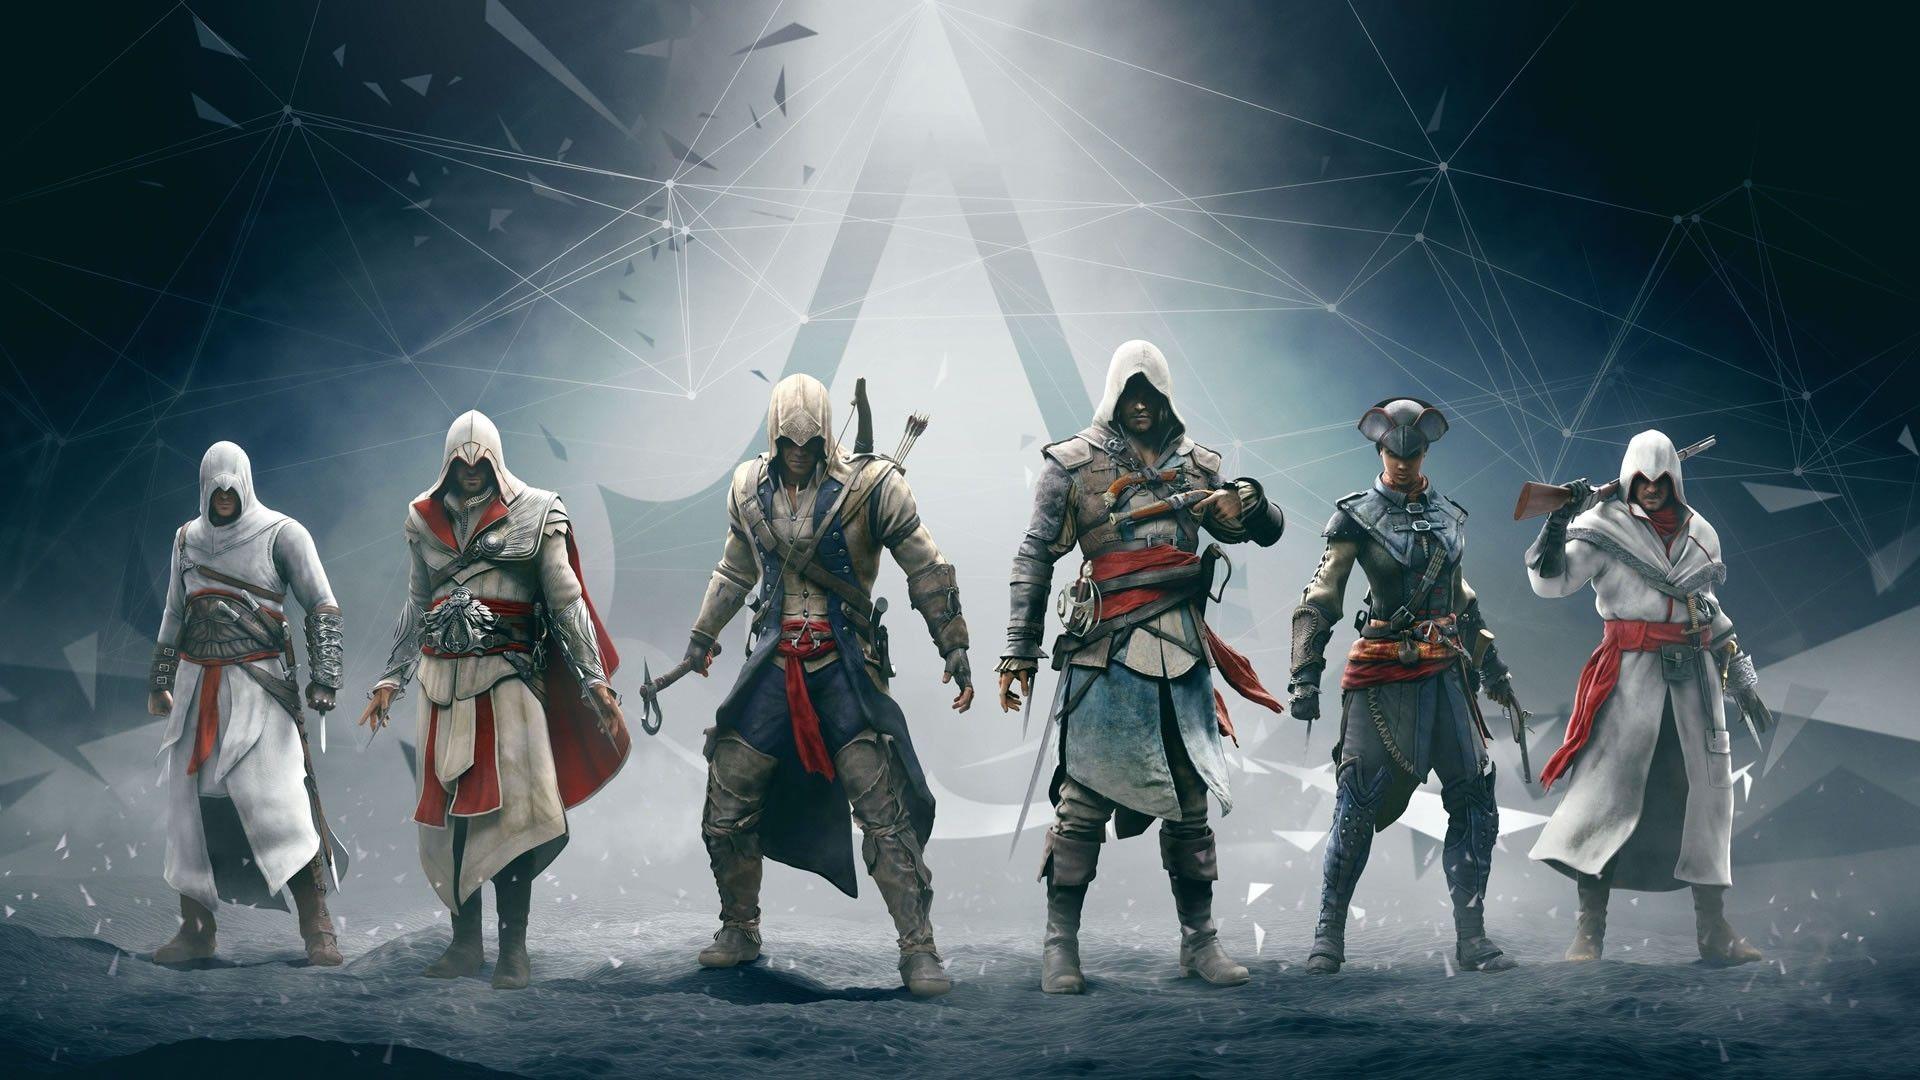 Assassin Creed HD Wallpaper. Assassin Creed Image. Cool